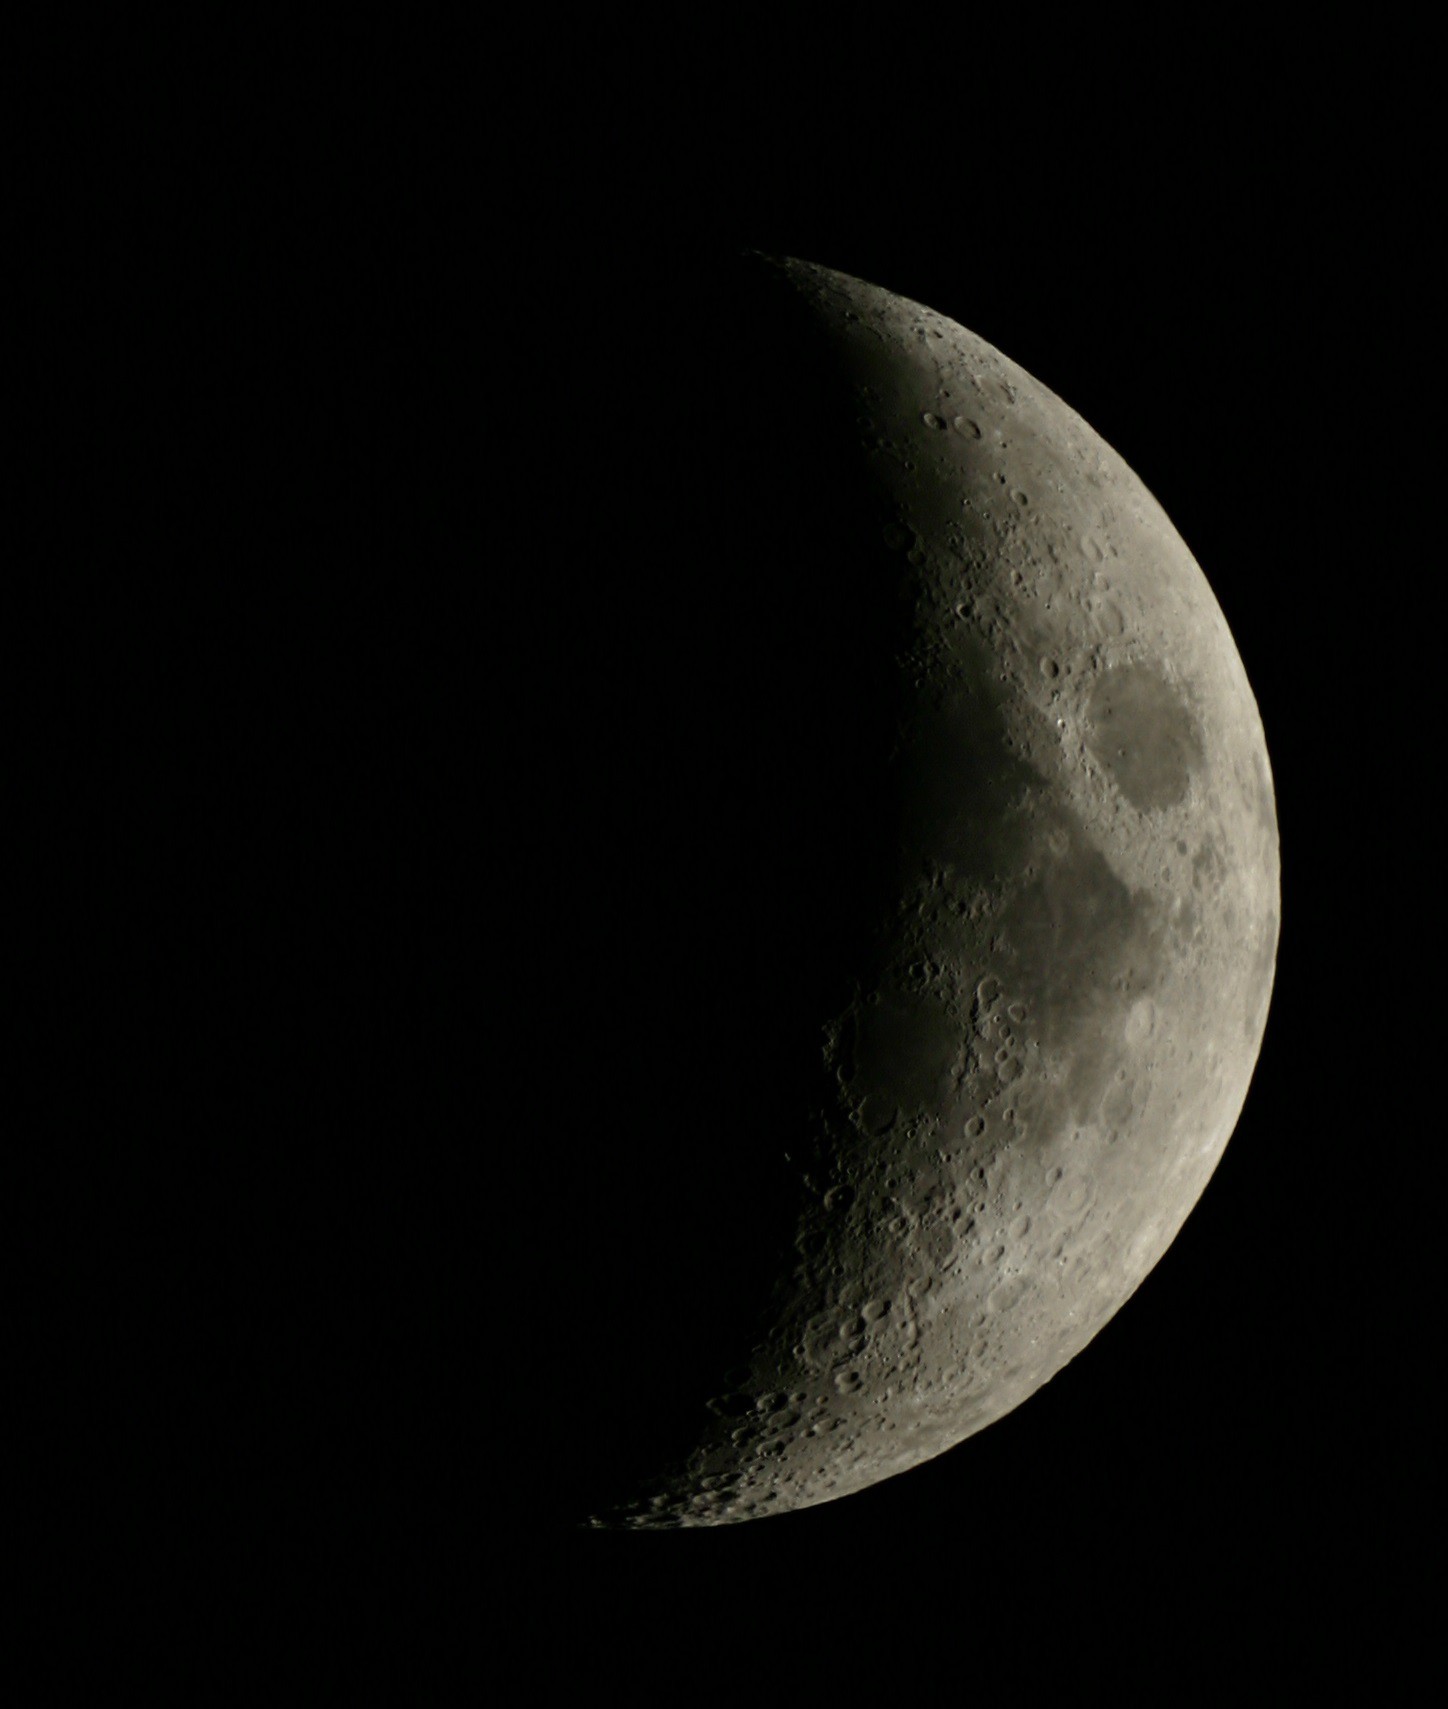 2014/01/04 HKT: 20h35m, Moon